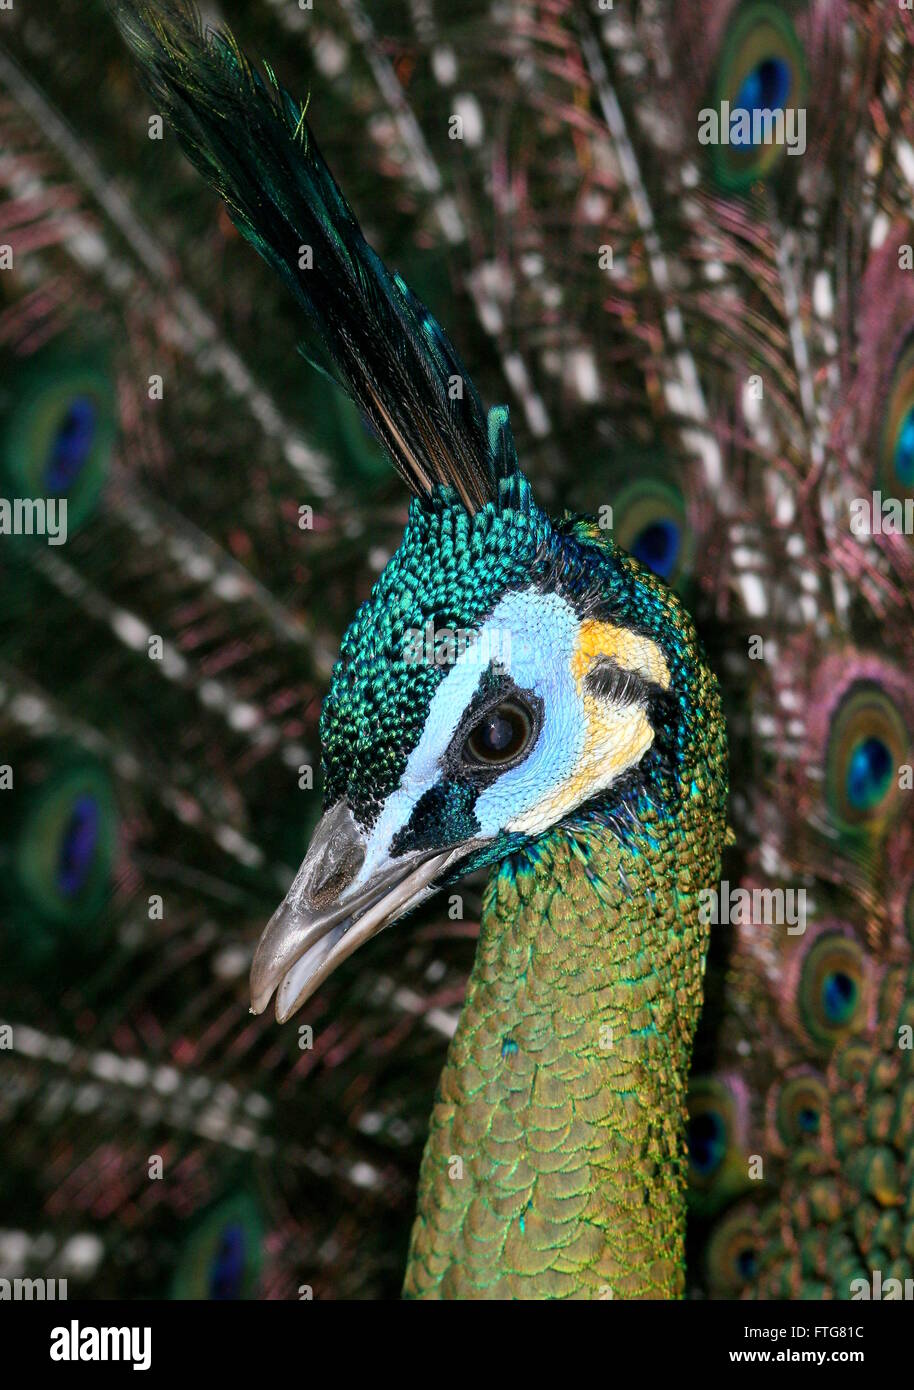 Verdes de Asia o Java peafowl Peacock (Pavo muticus), primer plano de la cabeza Foto de stock